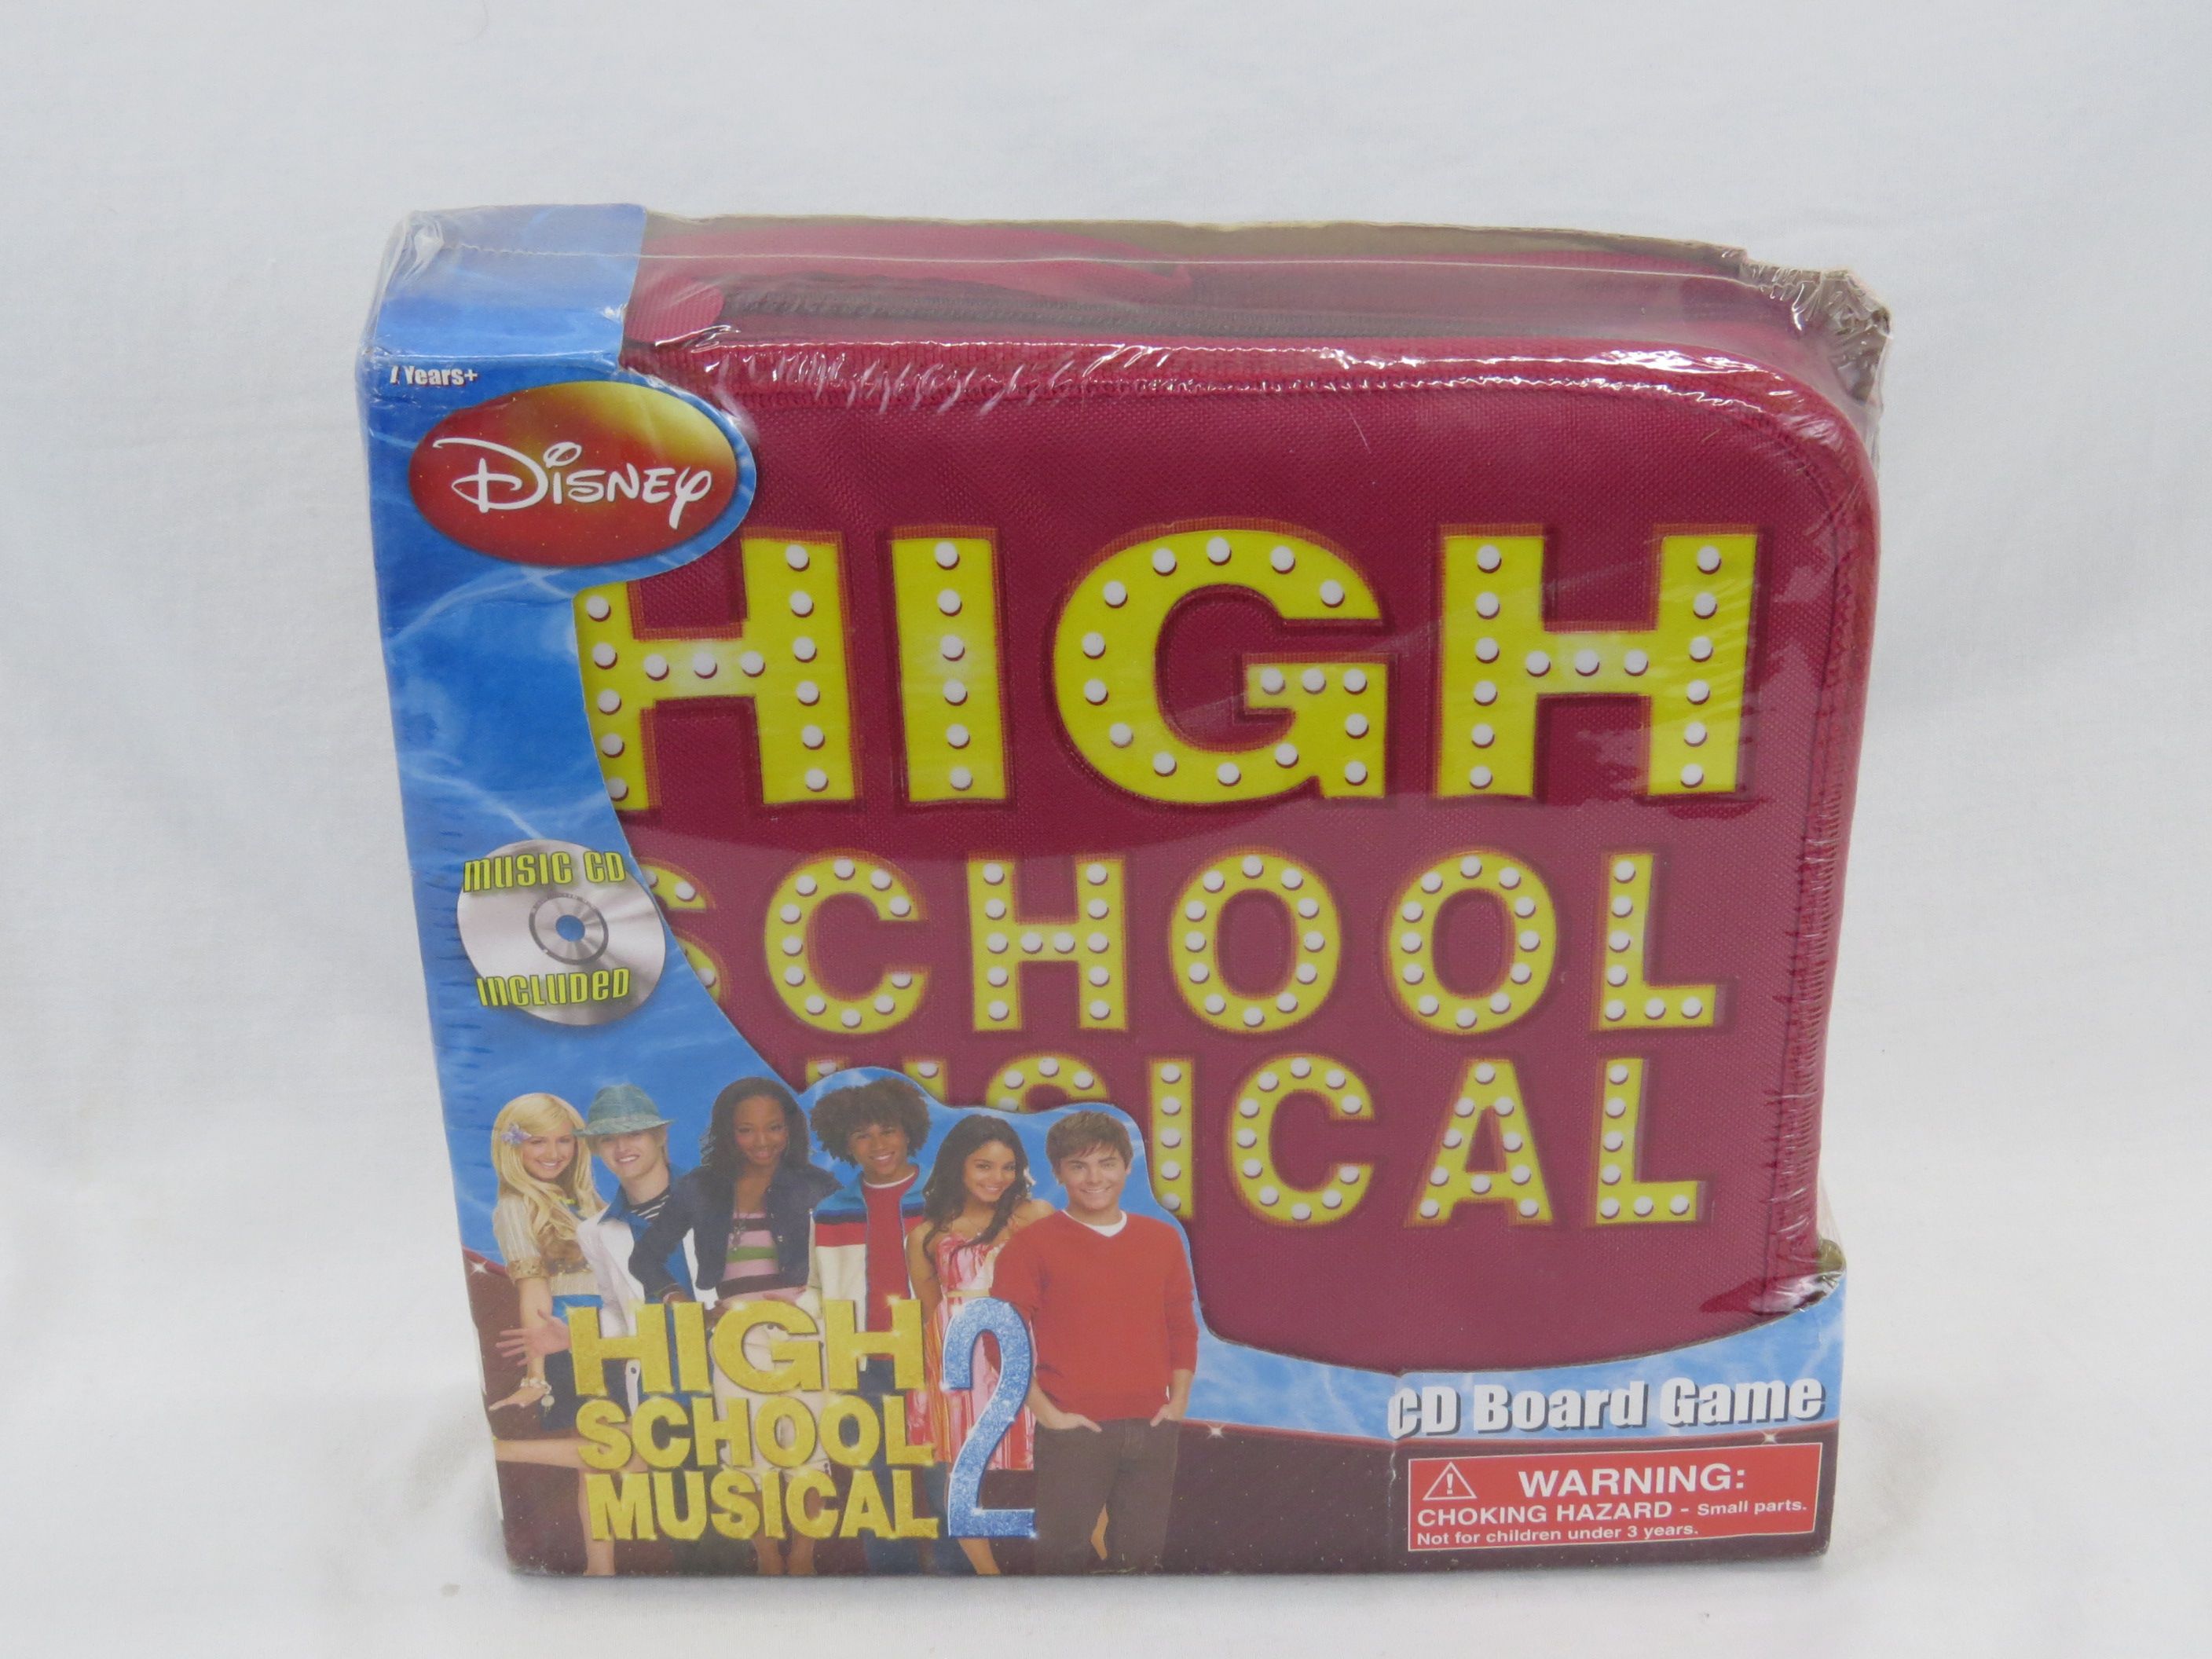 Disney High School Musical 2 CD Board Game